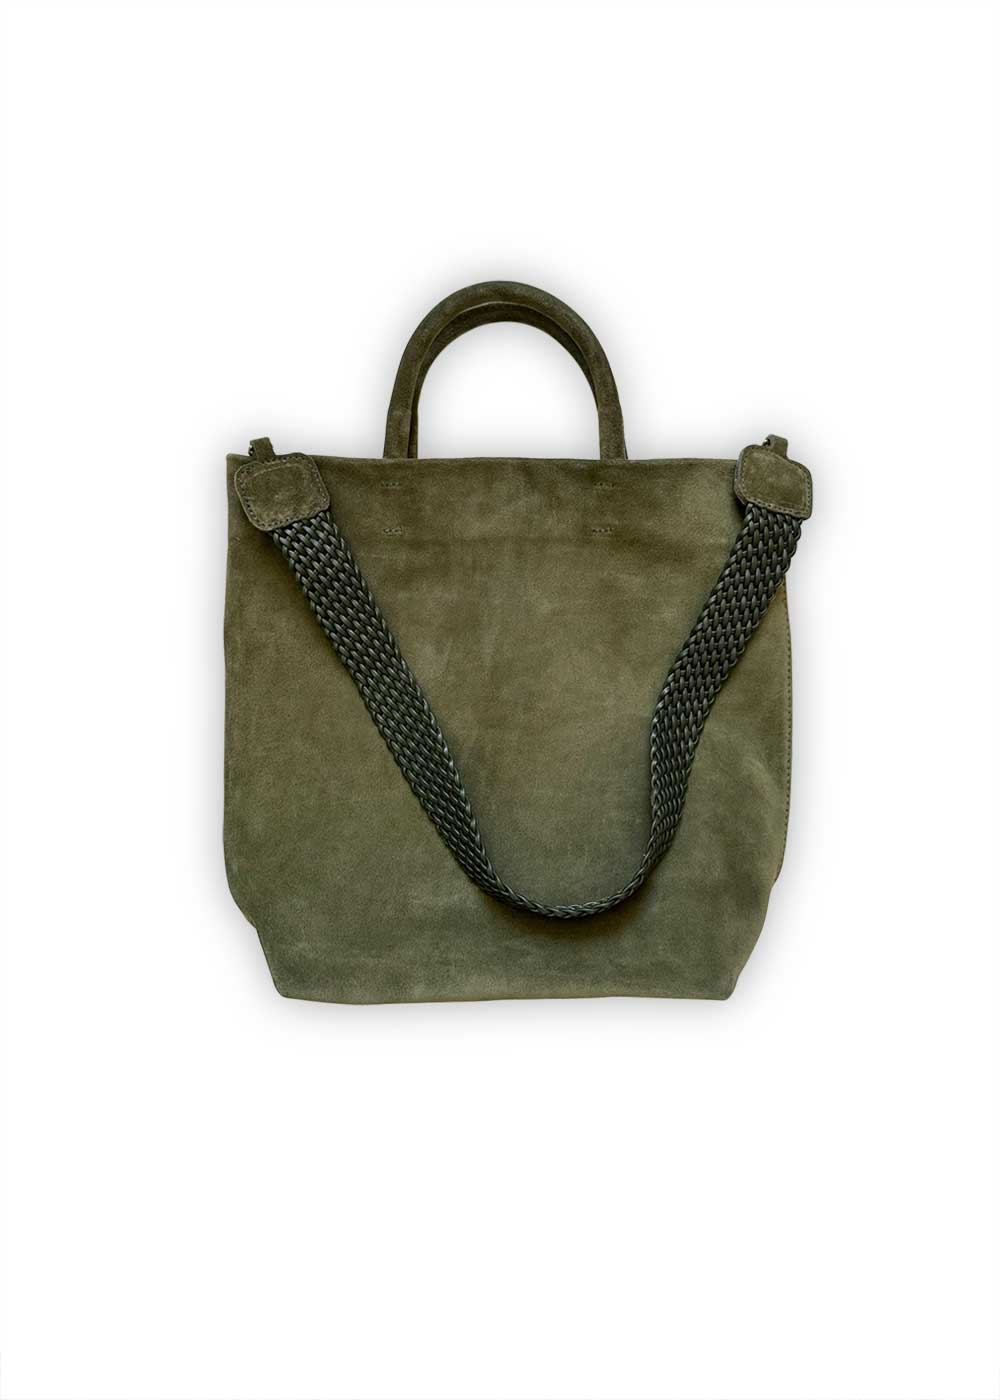 2b. Artemis Design Co. Kilim carpet Bag purse leather Turkey